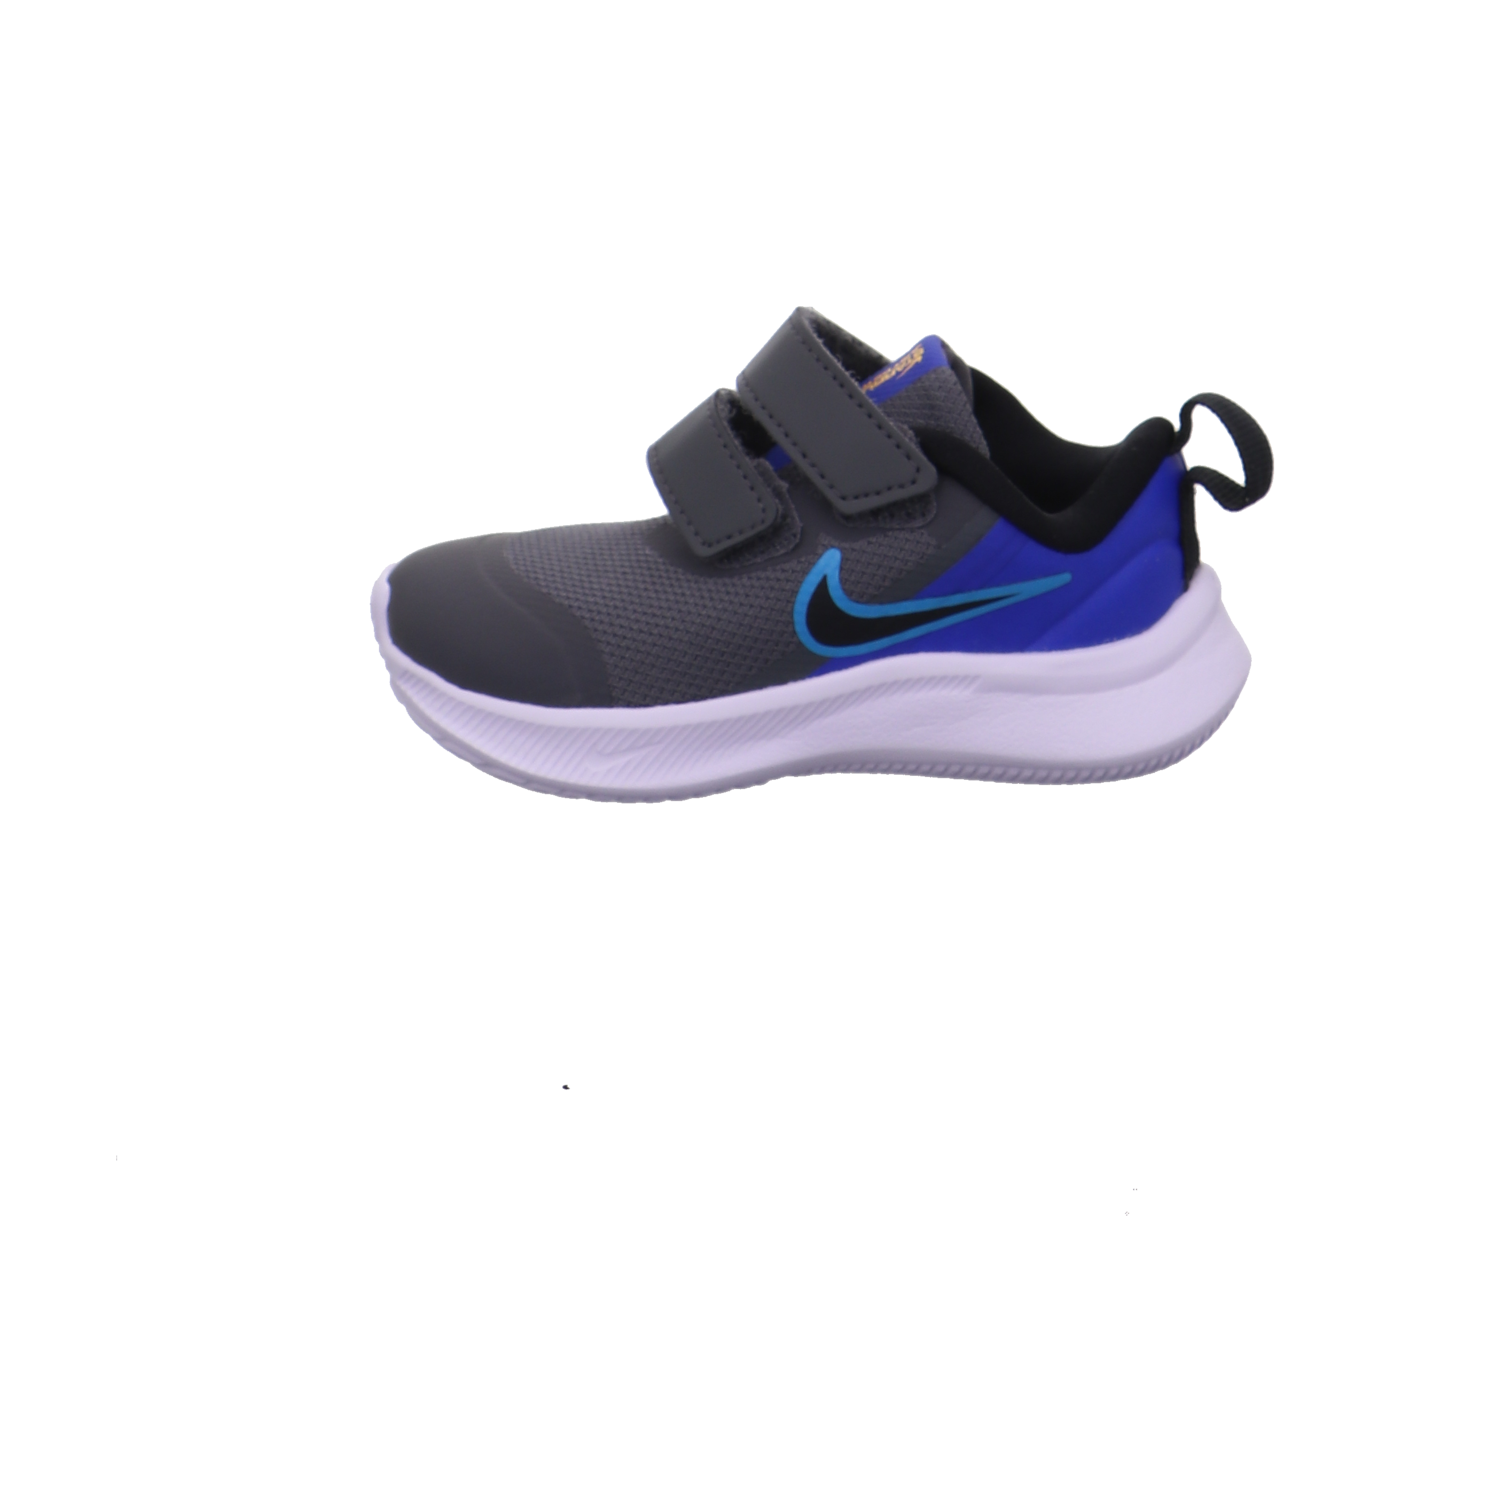 Nike Krabbel- und Lauflernschuhe grau kombi Bild1